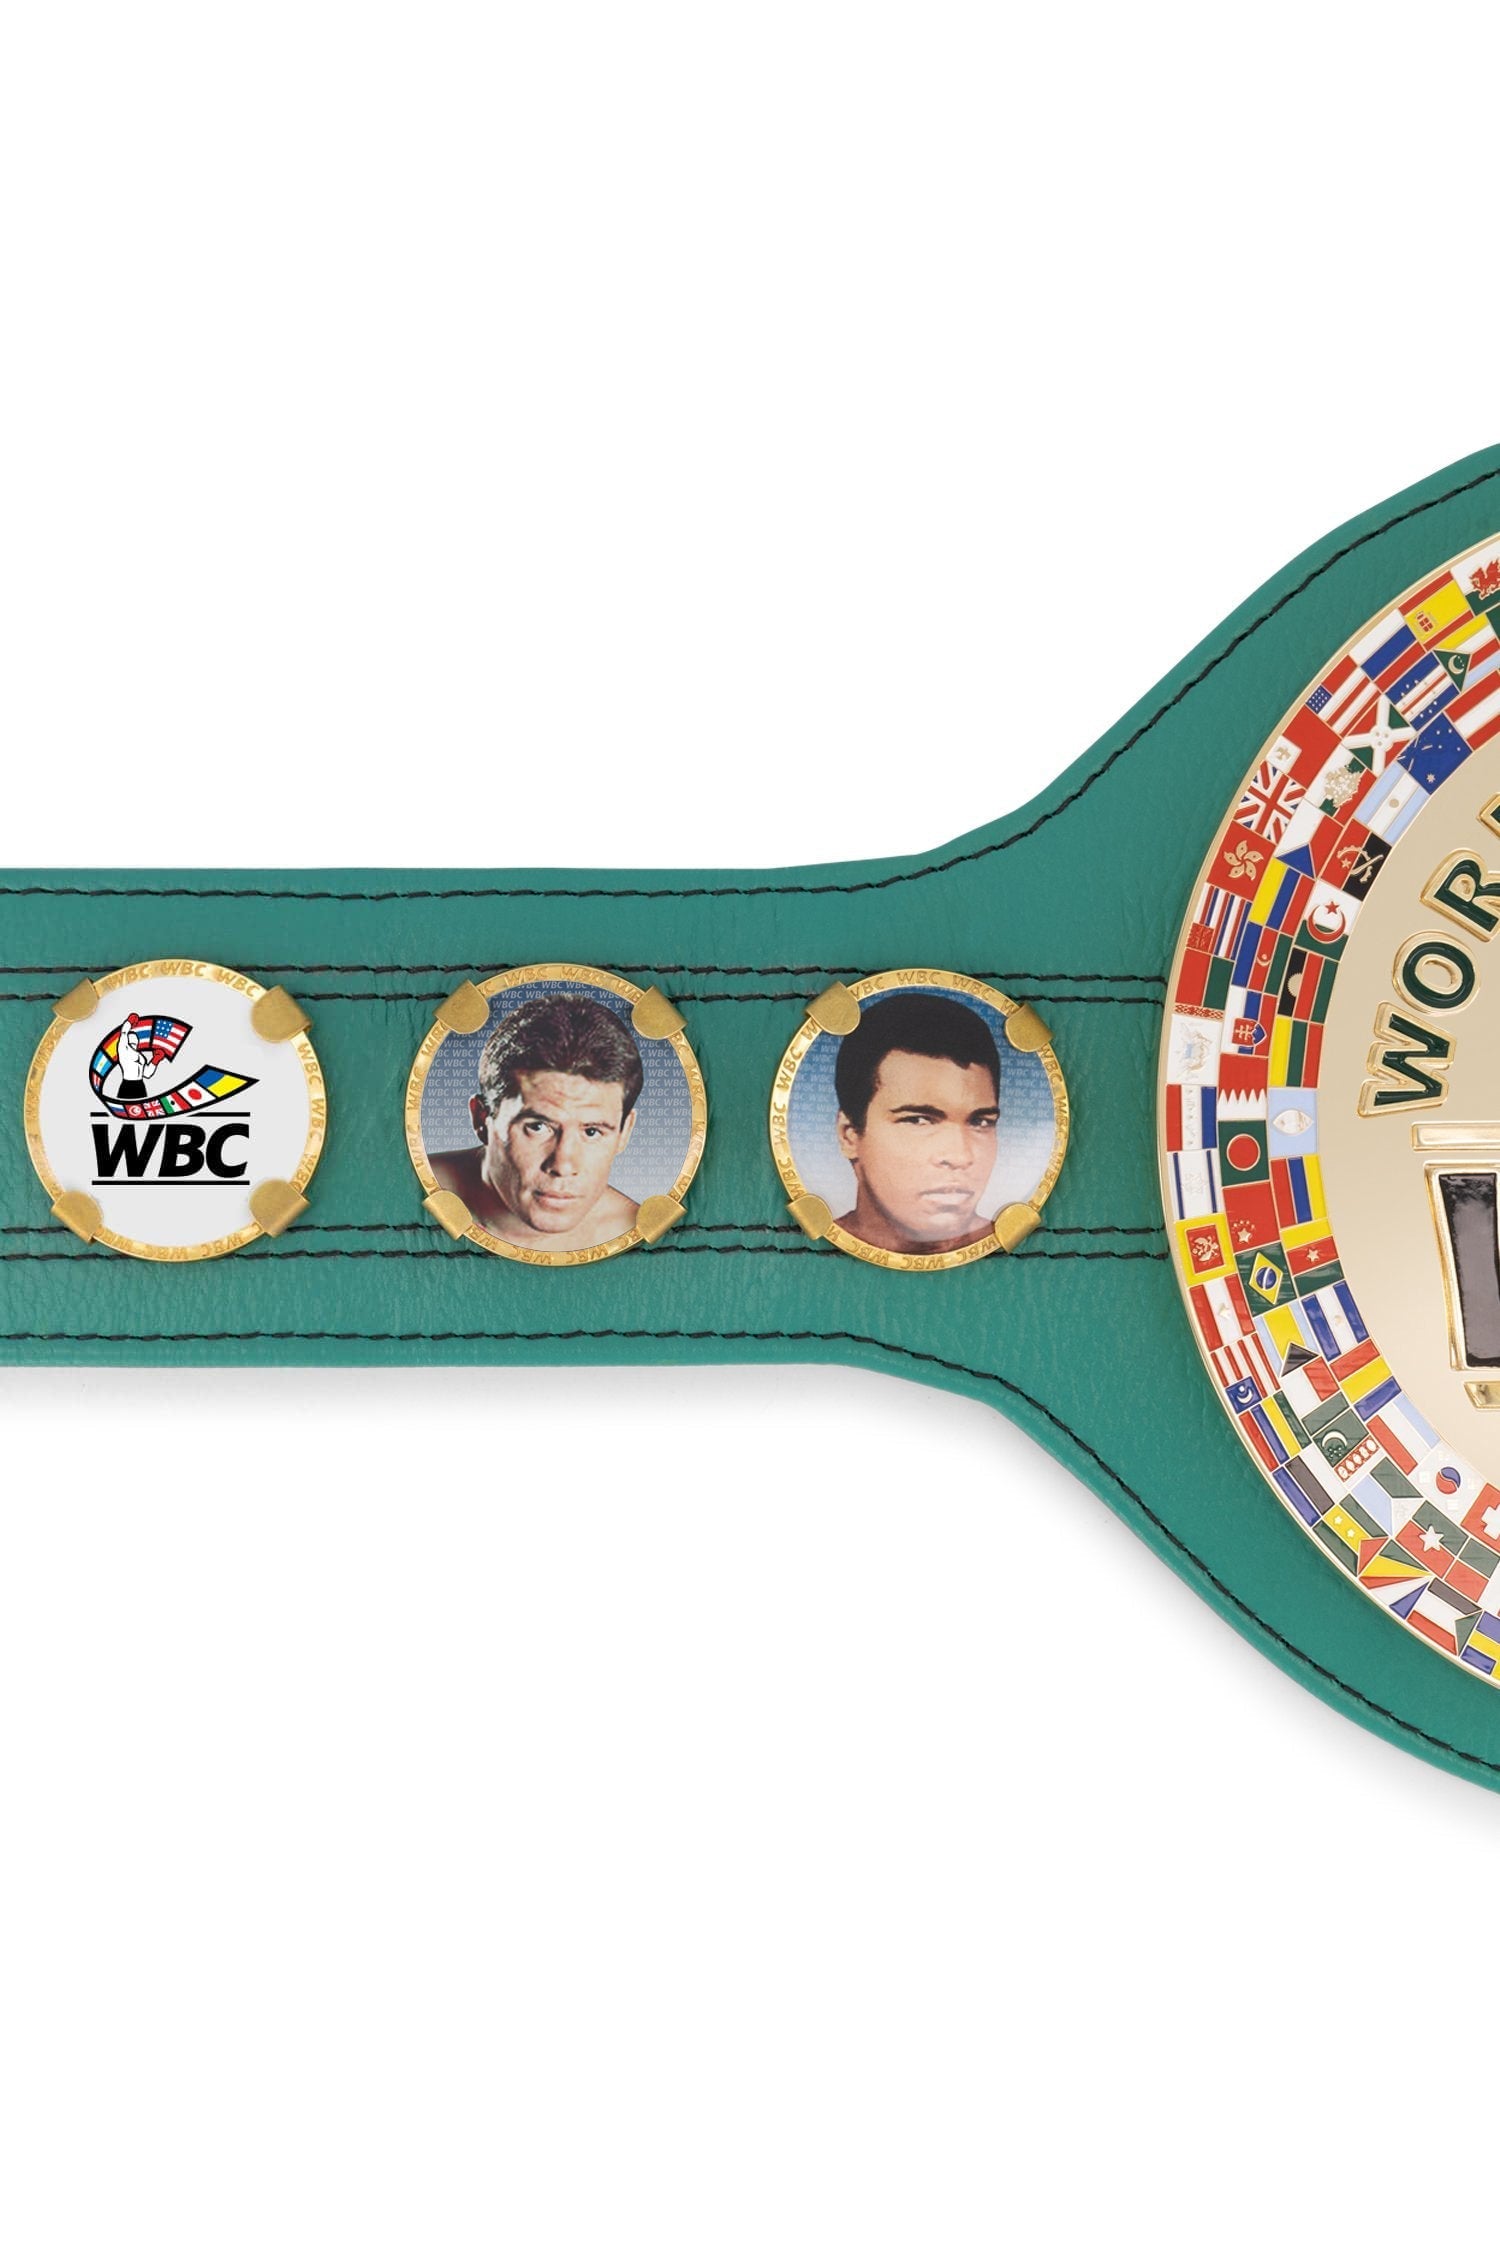 WBC Store WBC - Championship Belt  "Historic Fights" Julio César Chávez vs. Meldrick Taylor